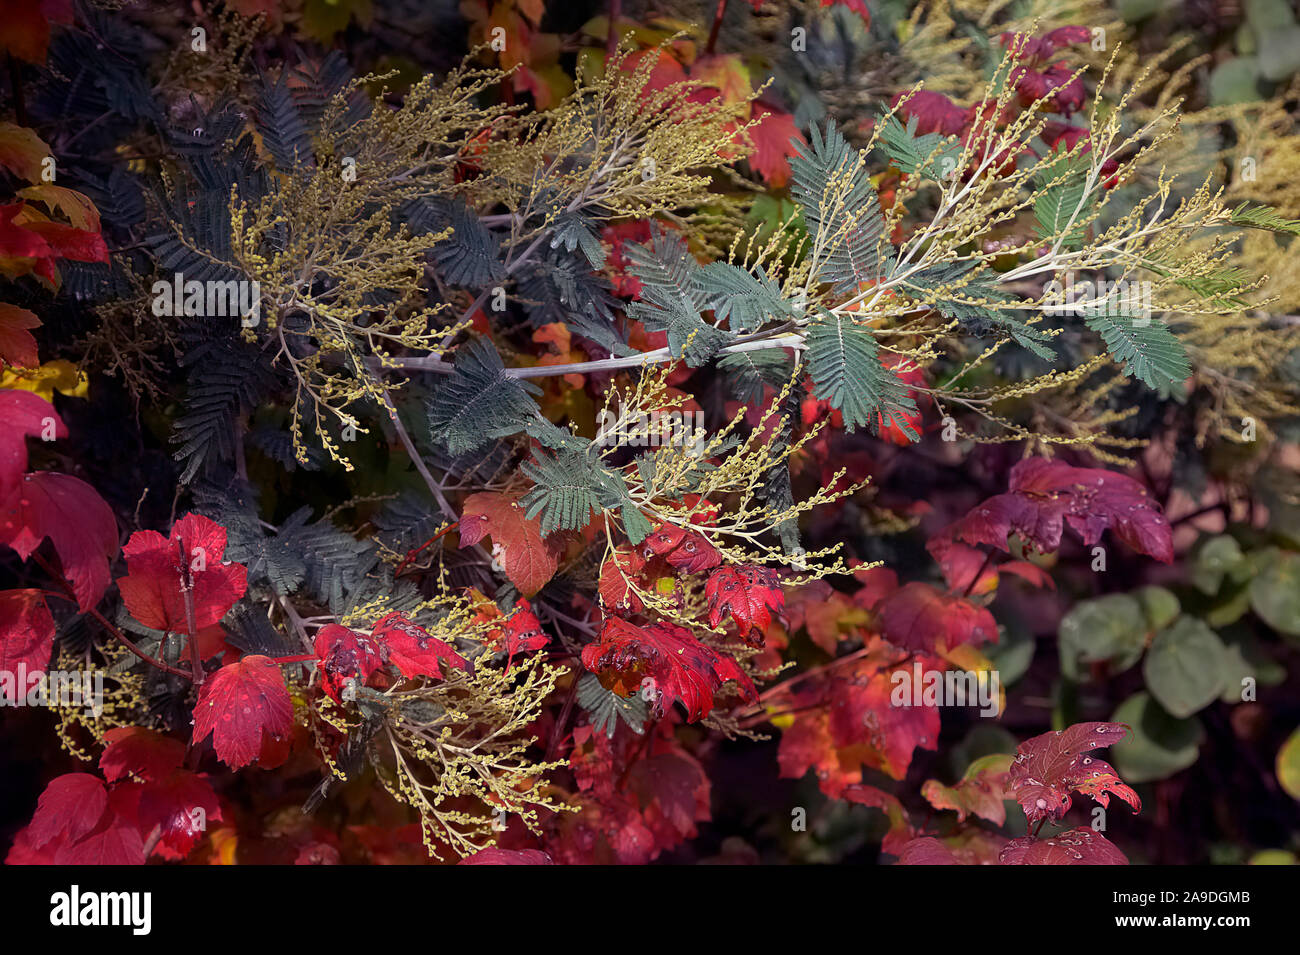 Acacia dealbata AGM developing buds with the autumn foliage of Viburnum opulus 'Roseum' AGM Stock Photo